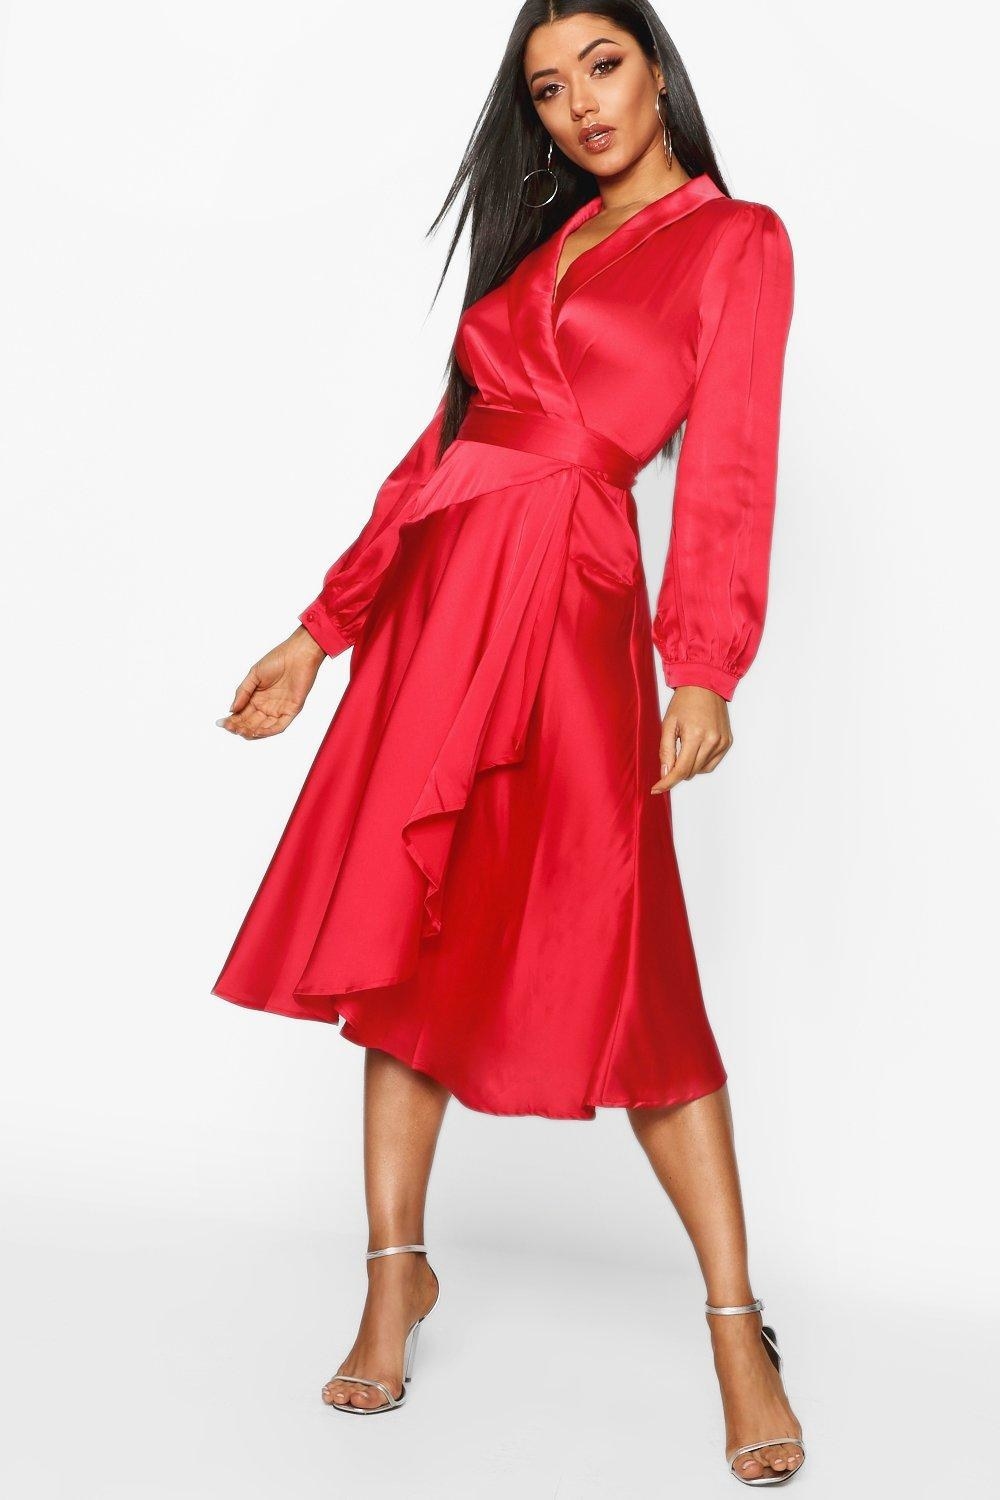 Model wearing red midi dress with deep neckline